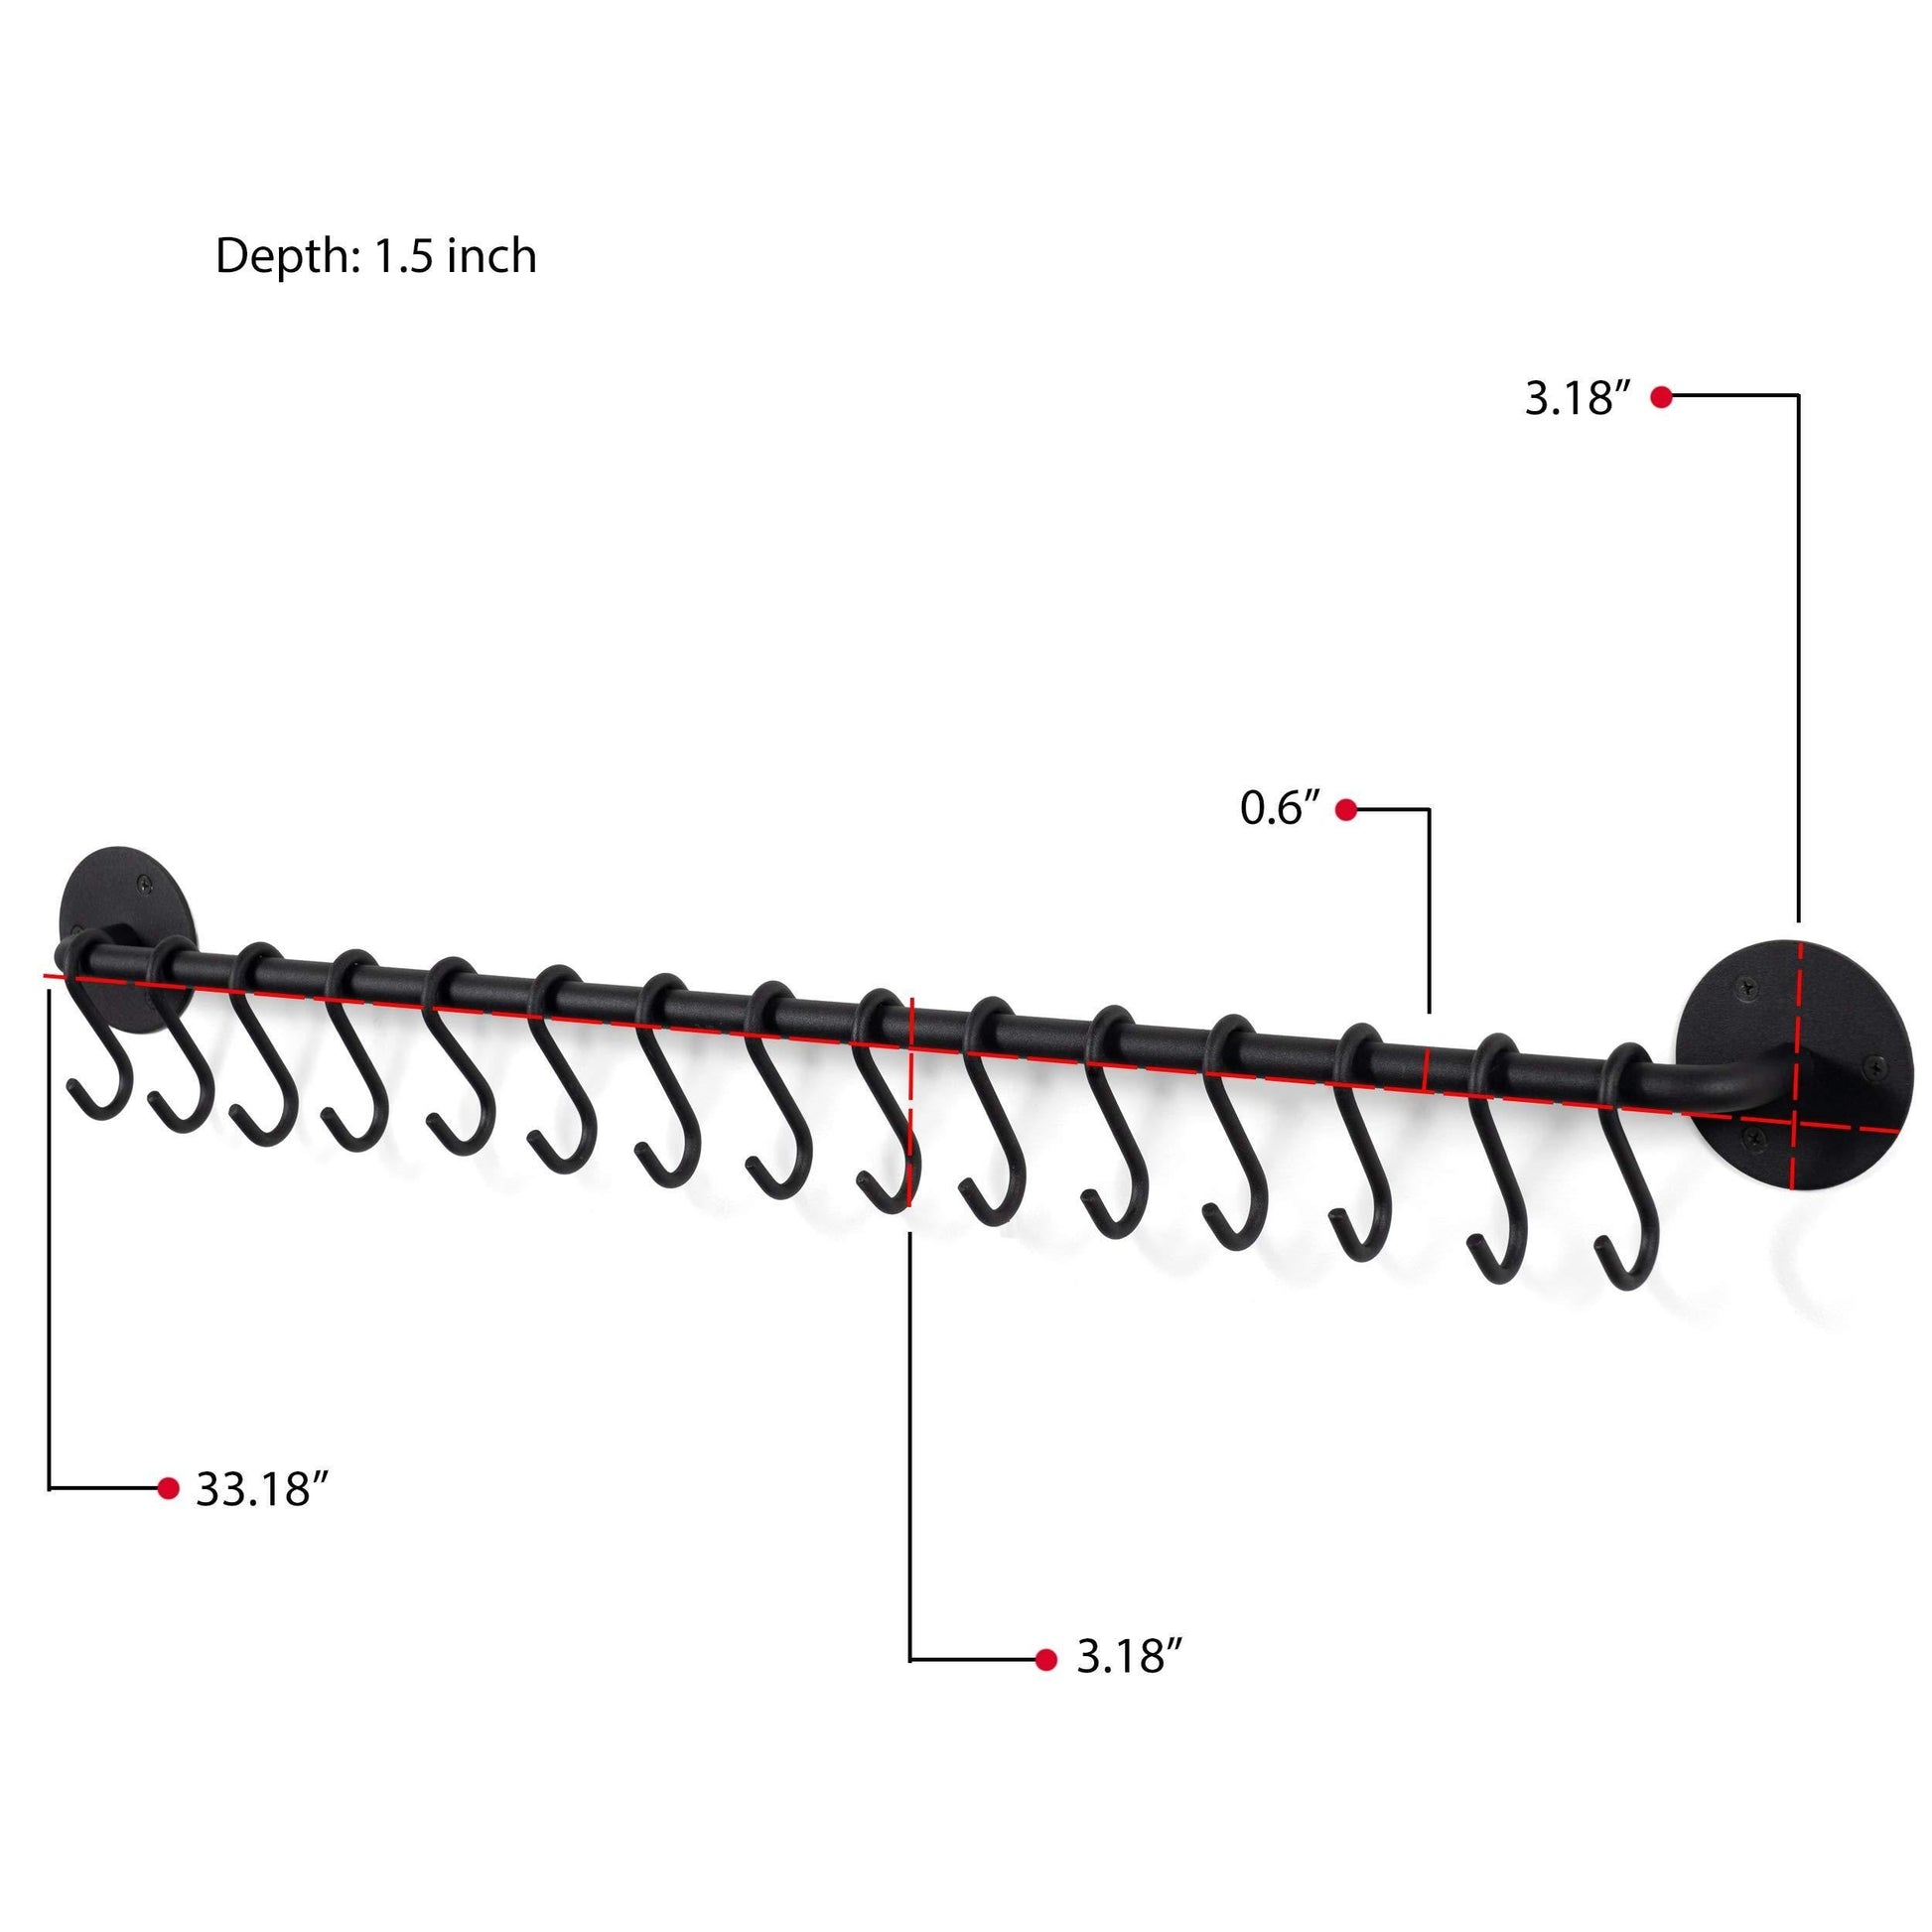 Top rated wallniture kitchen pot racks set of 2 wall rails 20 hooks solid iron 33 x 2 x 4 black